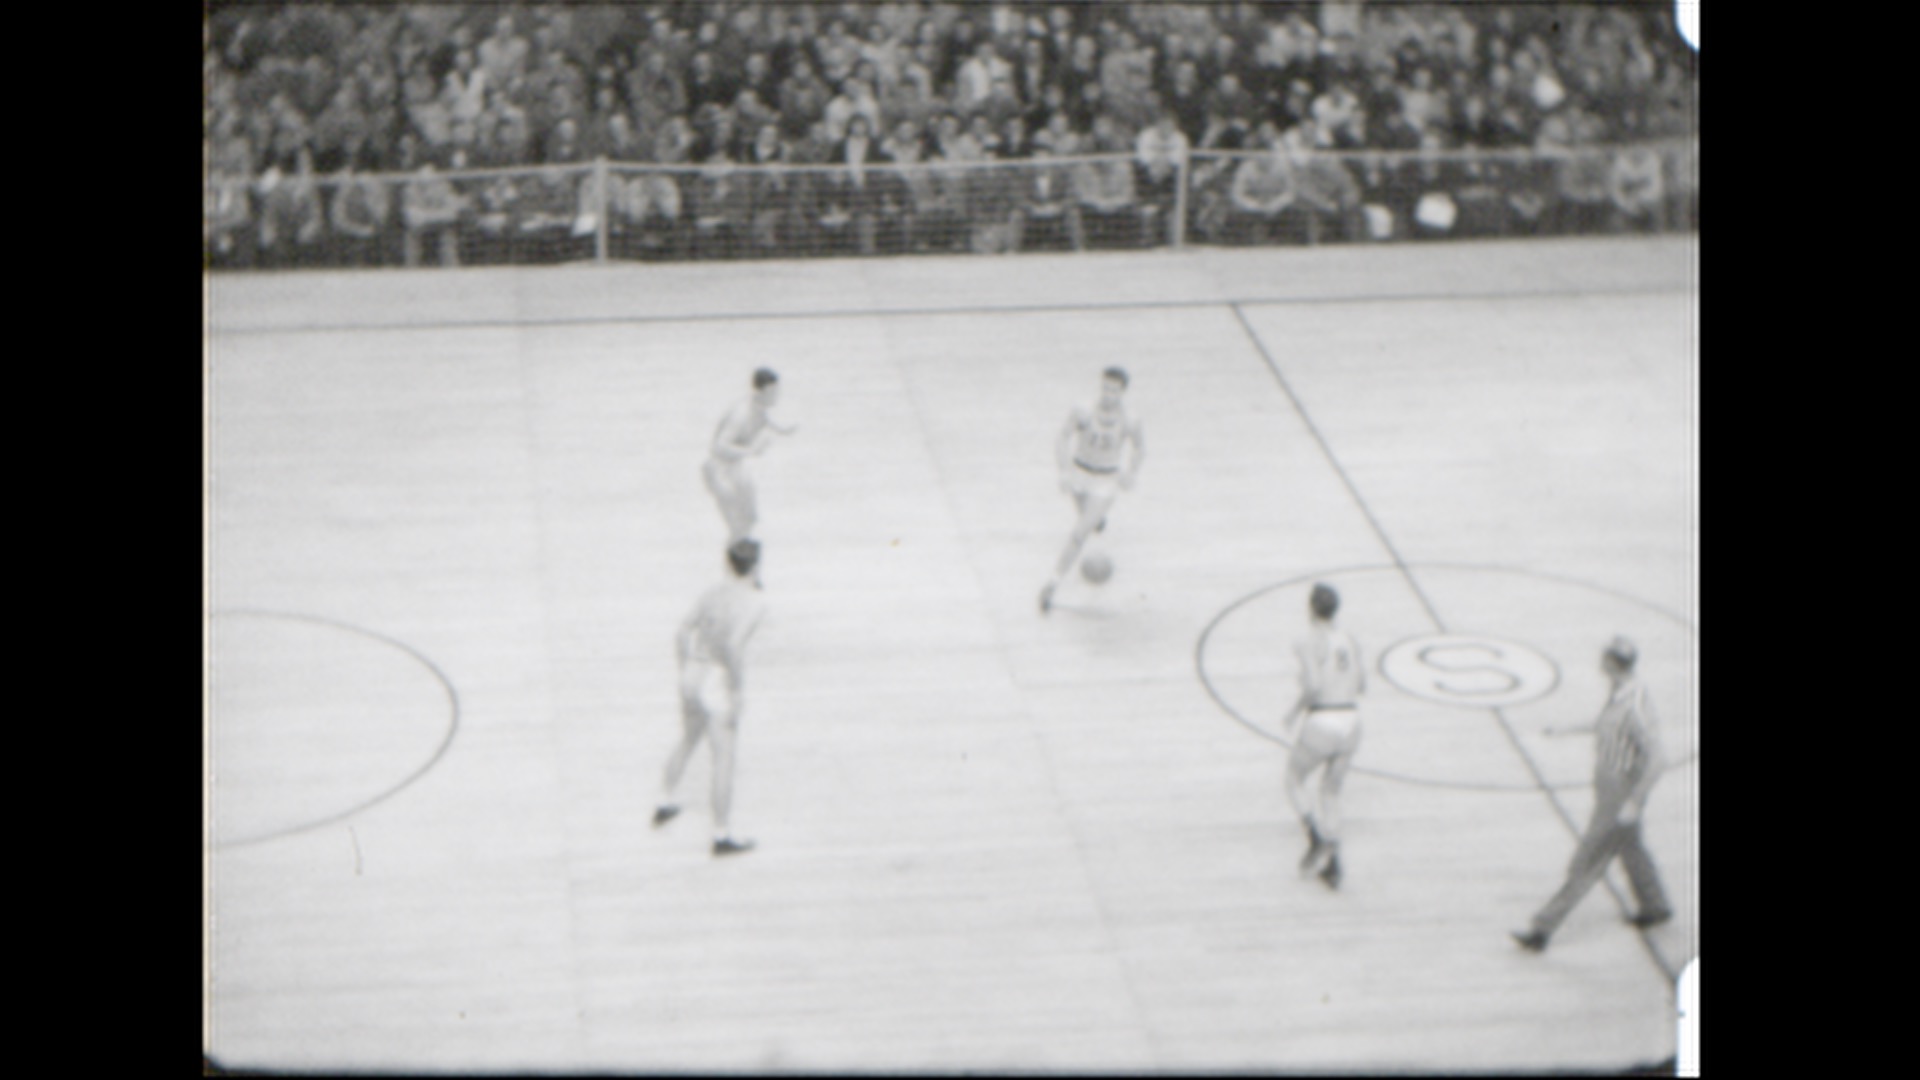 MSC Basketball vs Georgia Tech, 1947